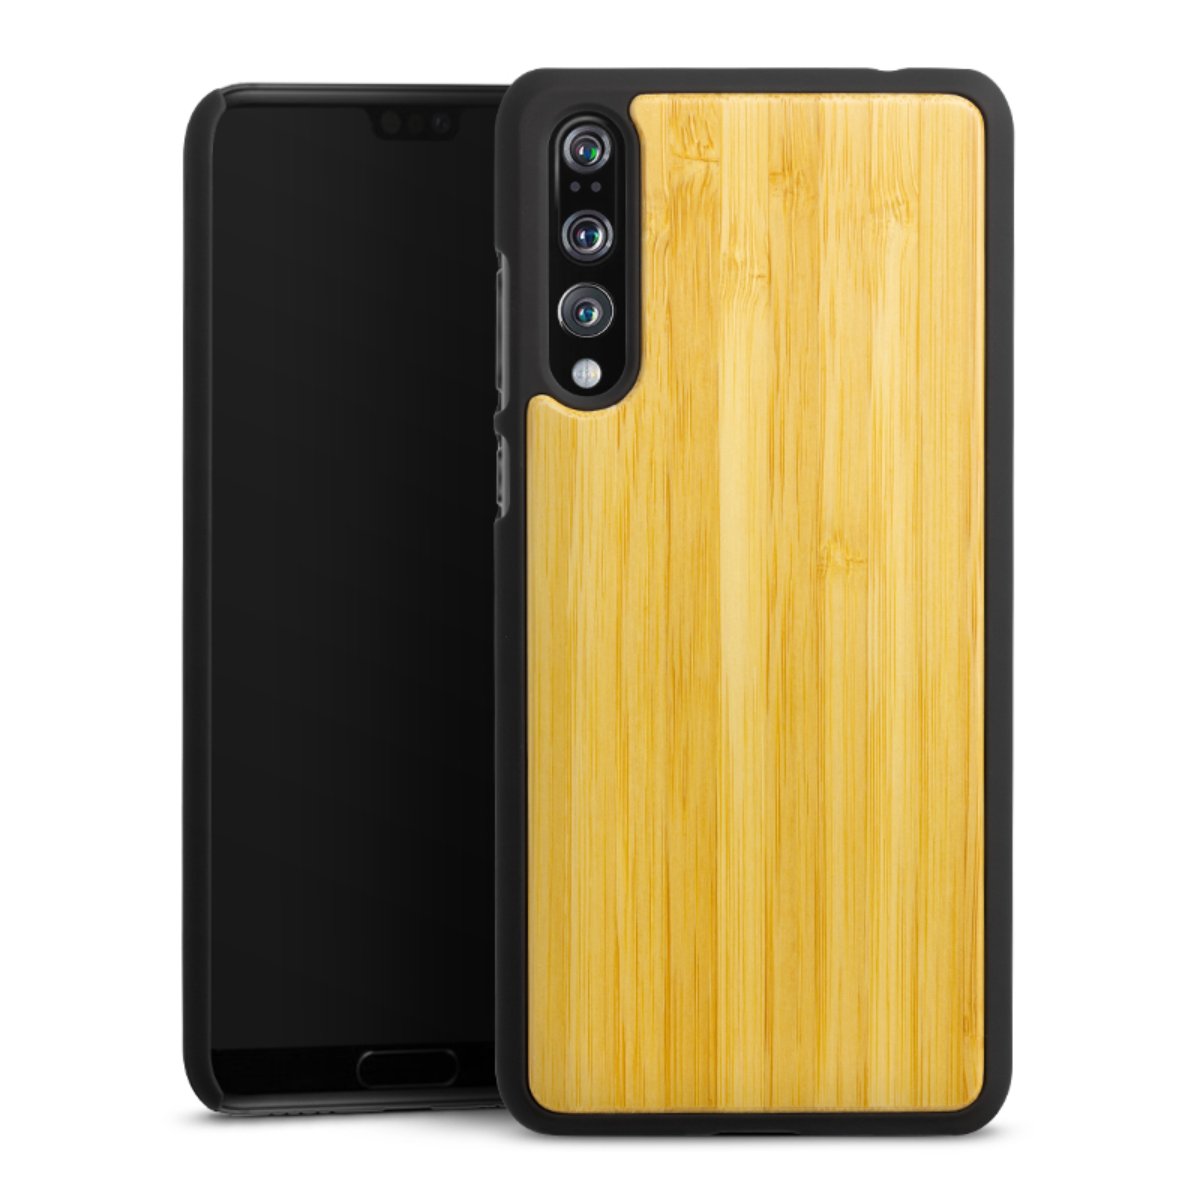 Wooden Hard Case per Huawei P20 Pro